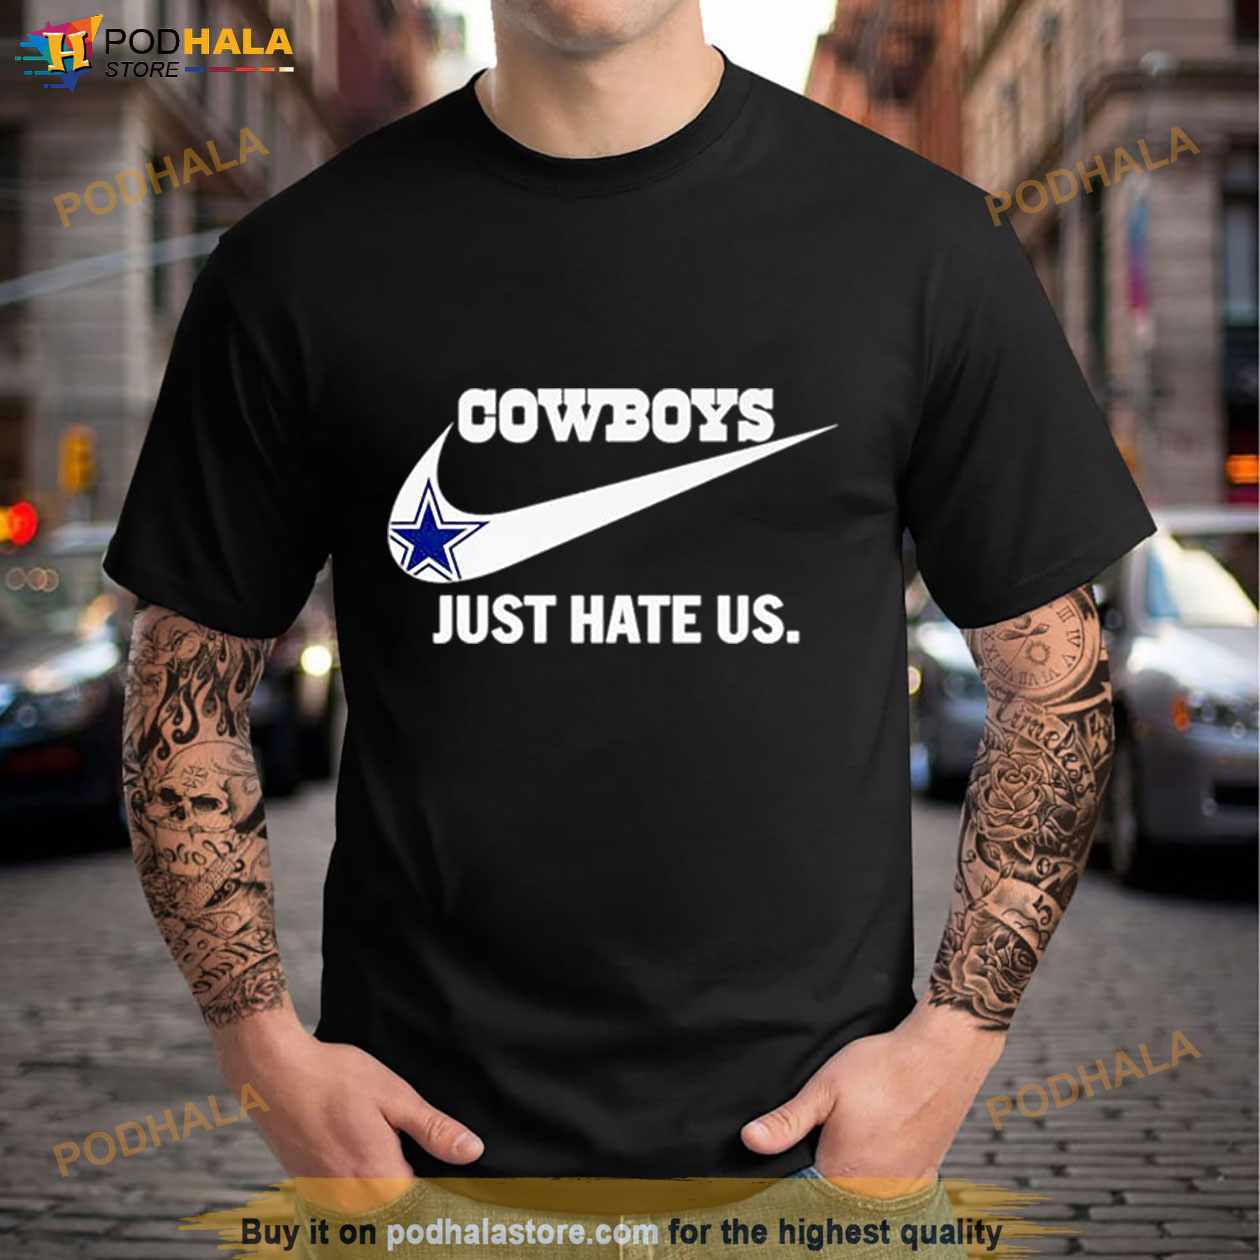 dallas cowboys logo shirt